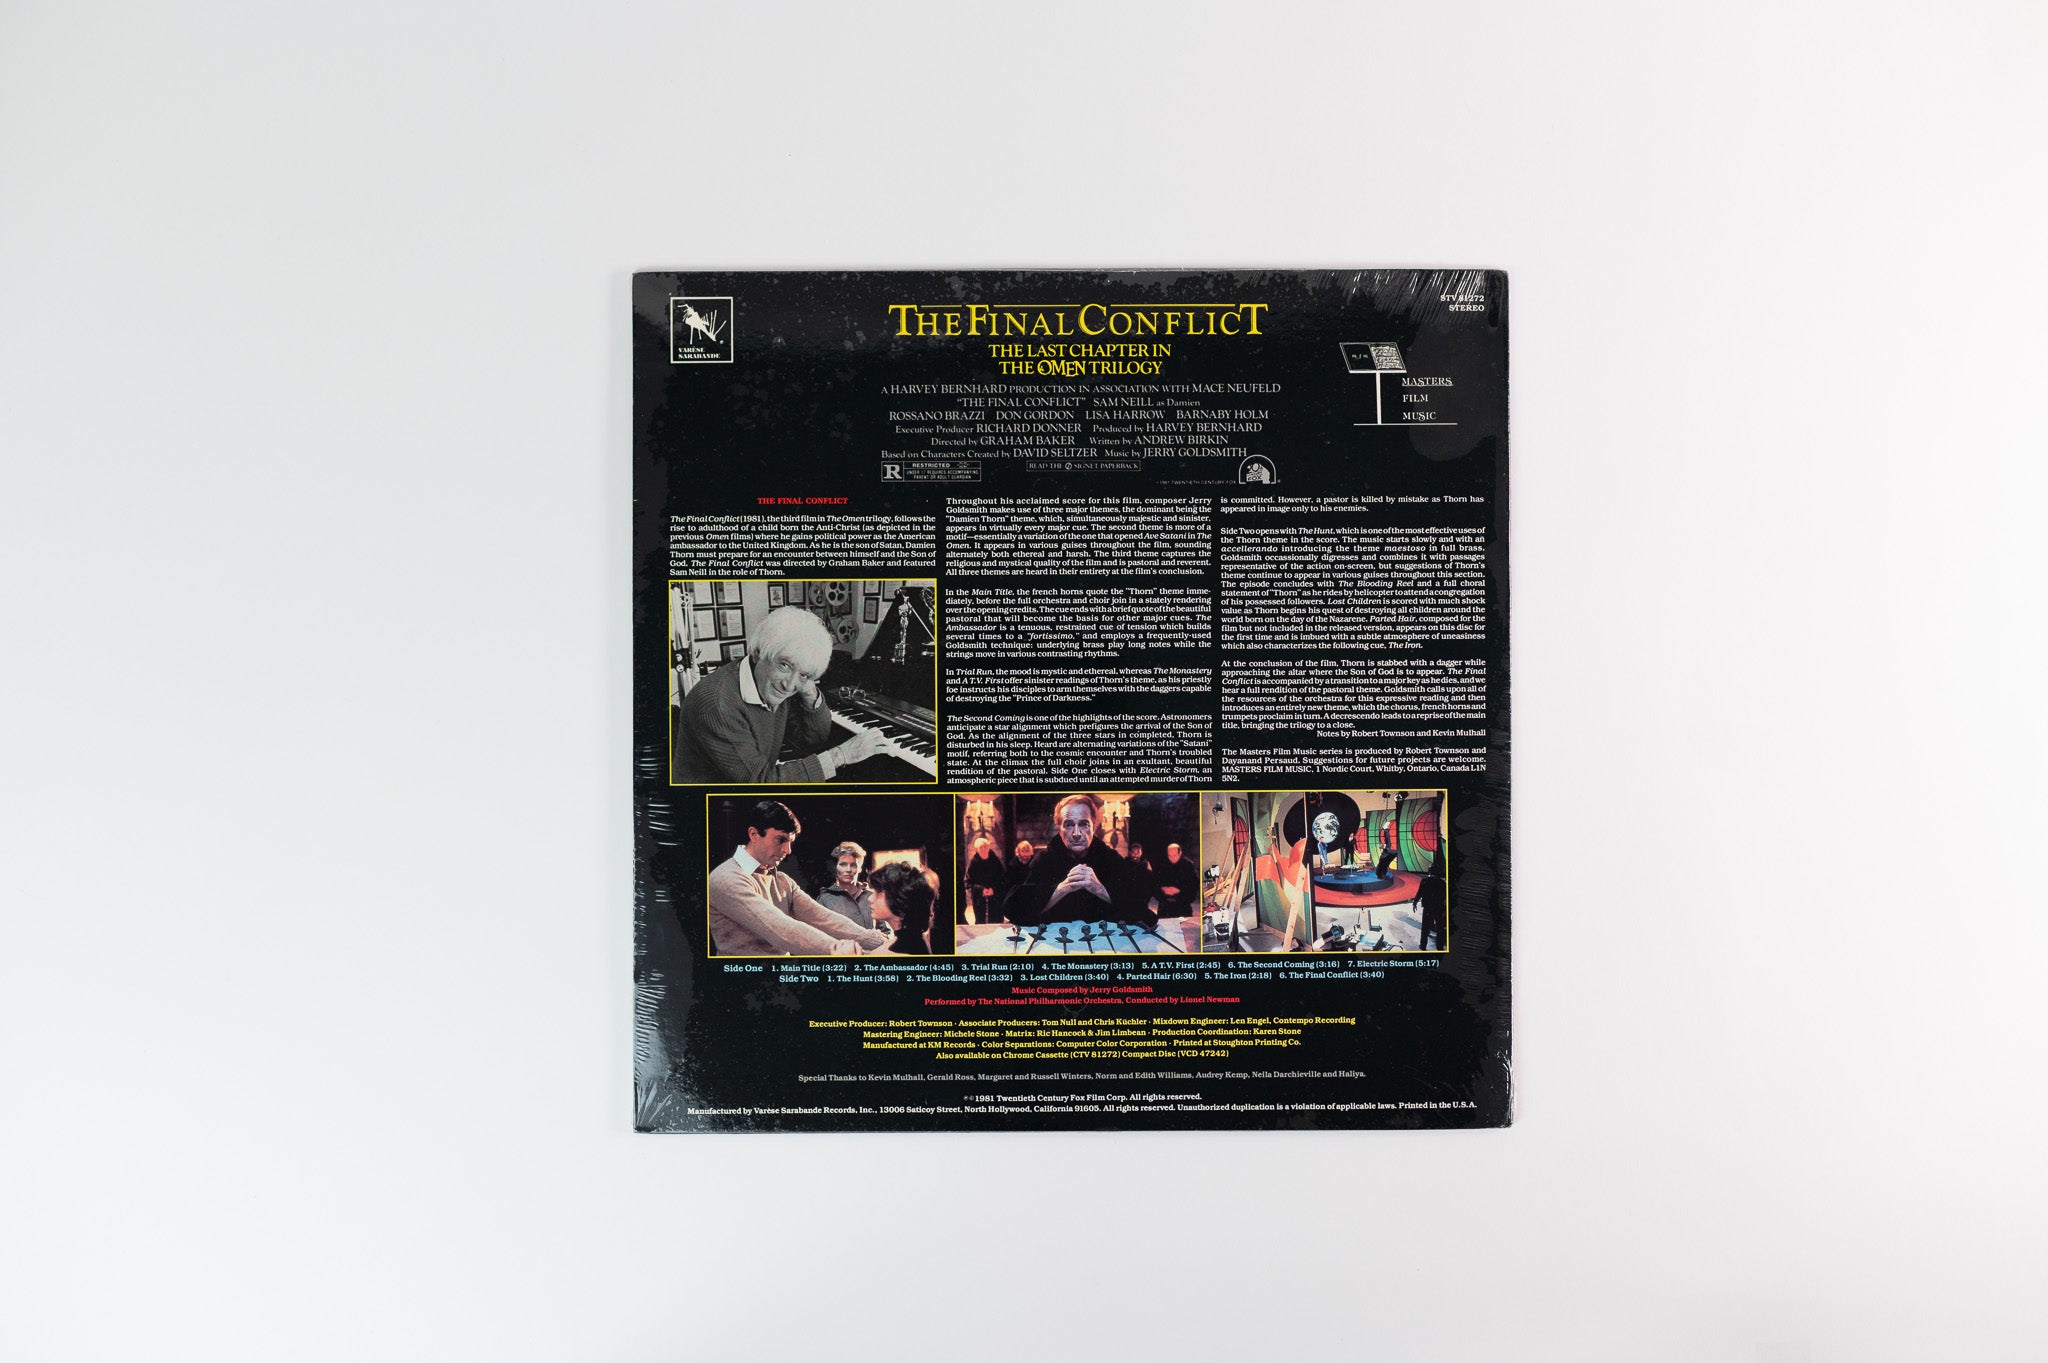 Jerry Goldsmith - The Final Conflict (Original Motion Picture Soundtrack) on Varese Sarabande - Sealed